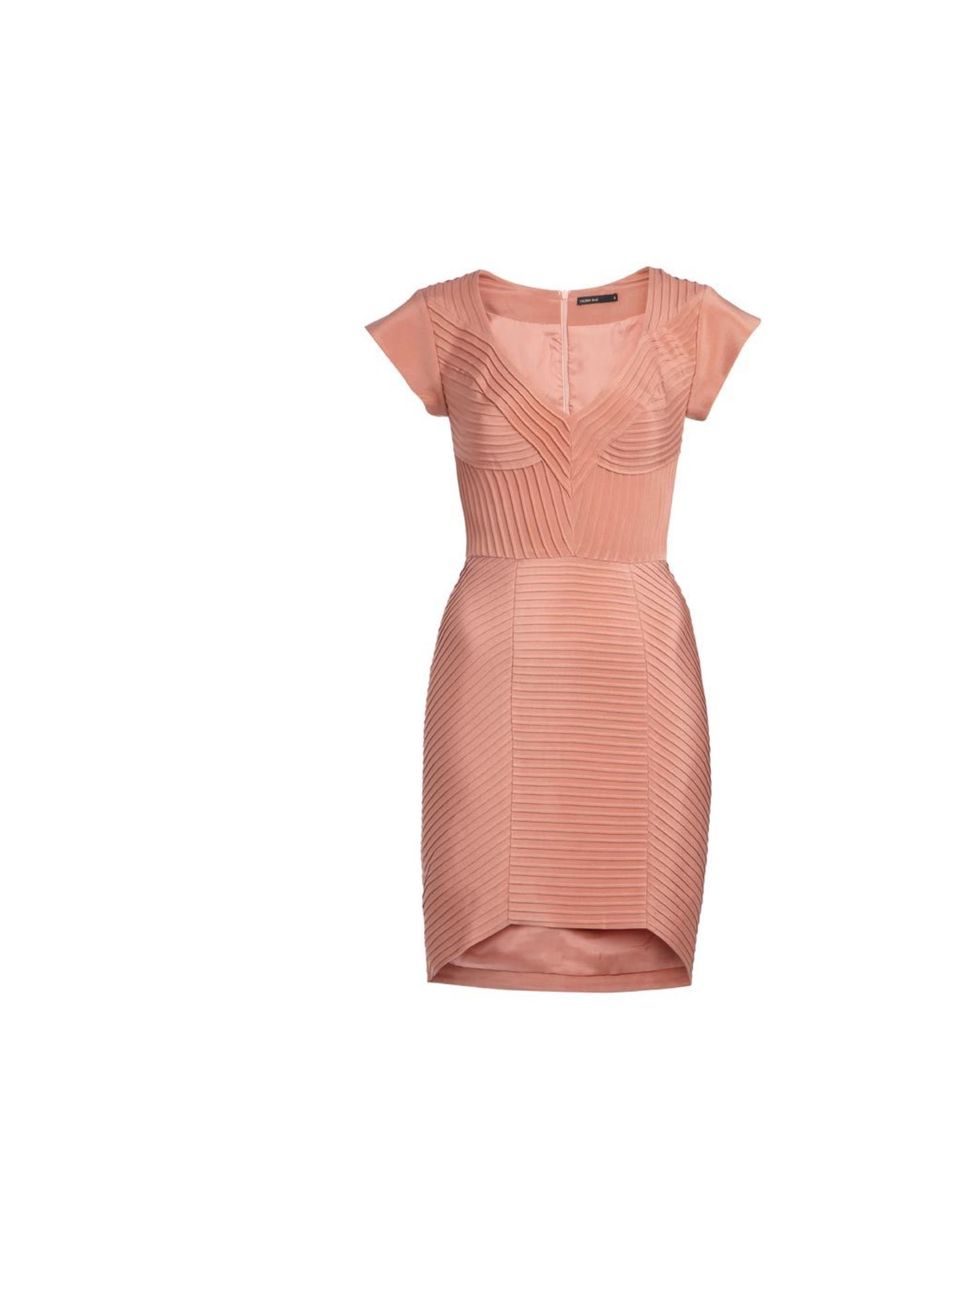 <p>Yeojin Bae 'Kaitlin' dress, £1,535, at <a href="http://www.avenue32.com/designers/yeojin-bae/blush-kaitlin-dress-48983.html">Avenue32.com</a></p>